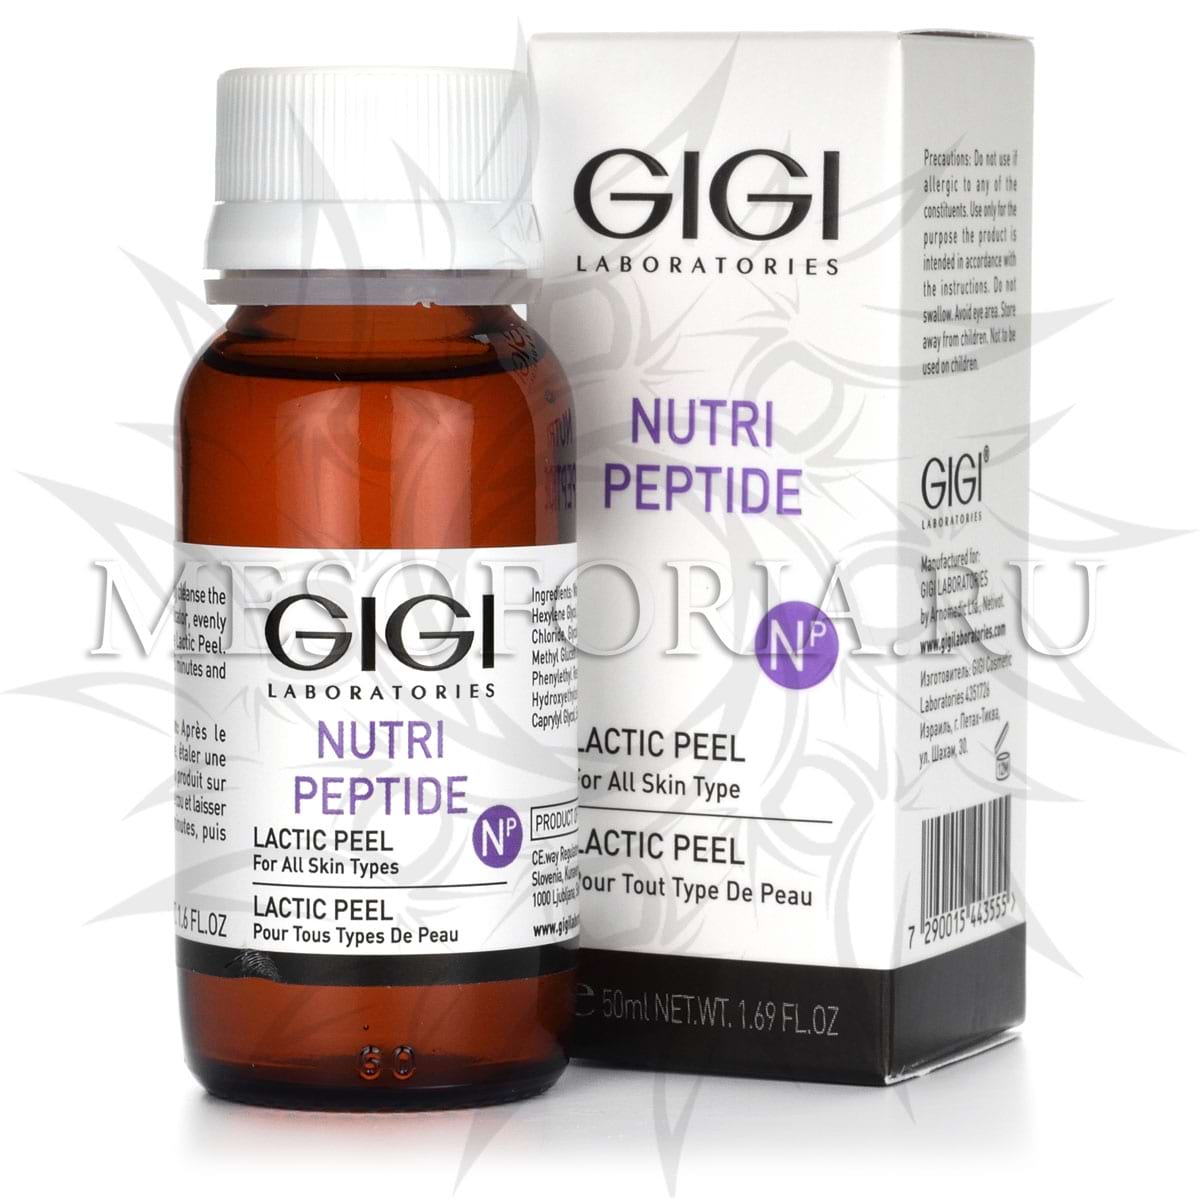 Пептидный молочный пилинг / Lactic Peel, Nutri-Peptide, GiGi (Джи Джи) – 50 мл